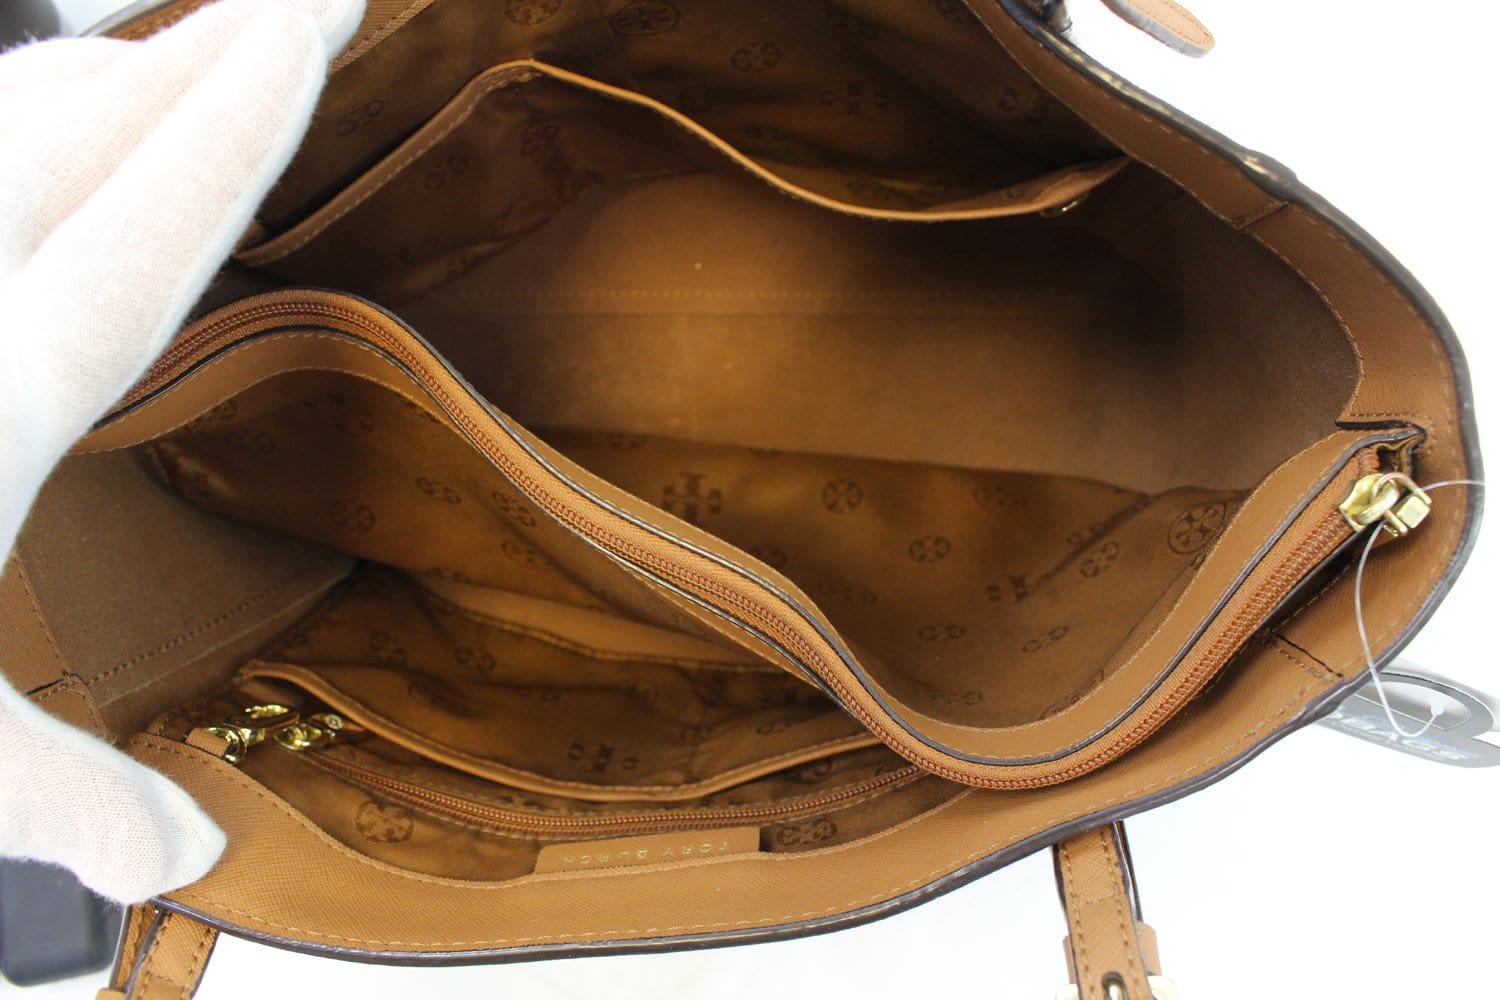 TORY BURCH York Tan Leather Tote Small Bag